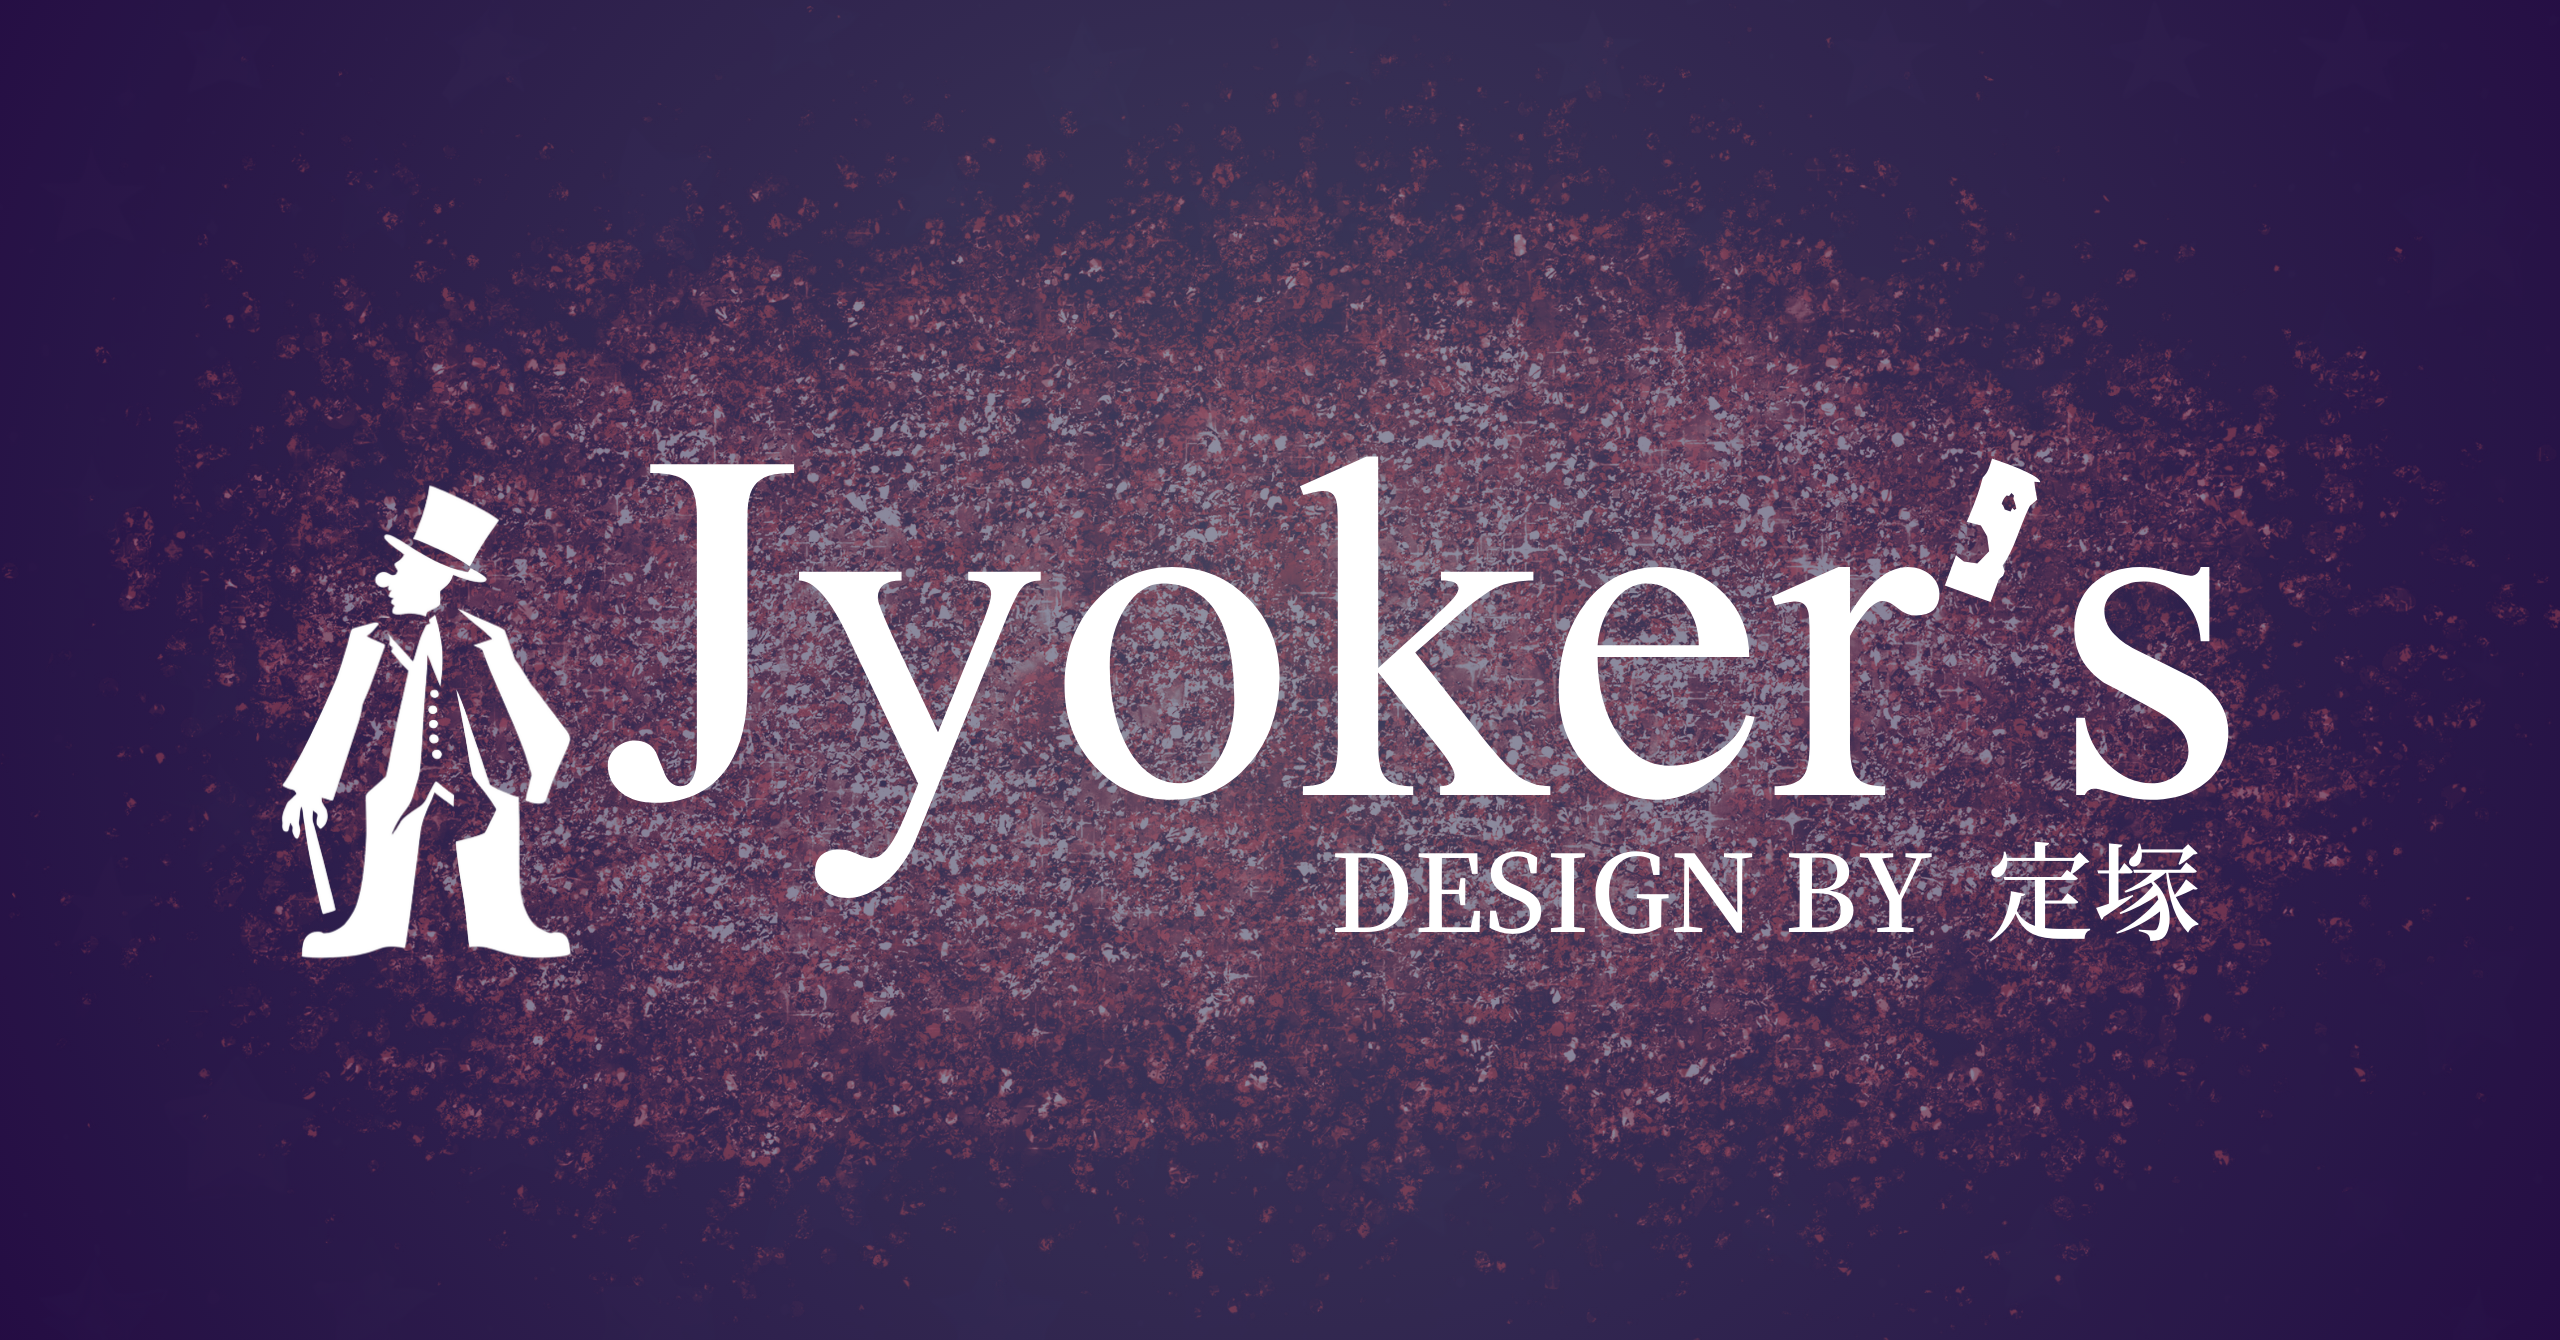 Jyoker's